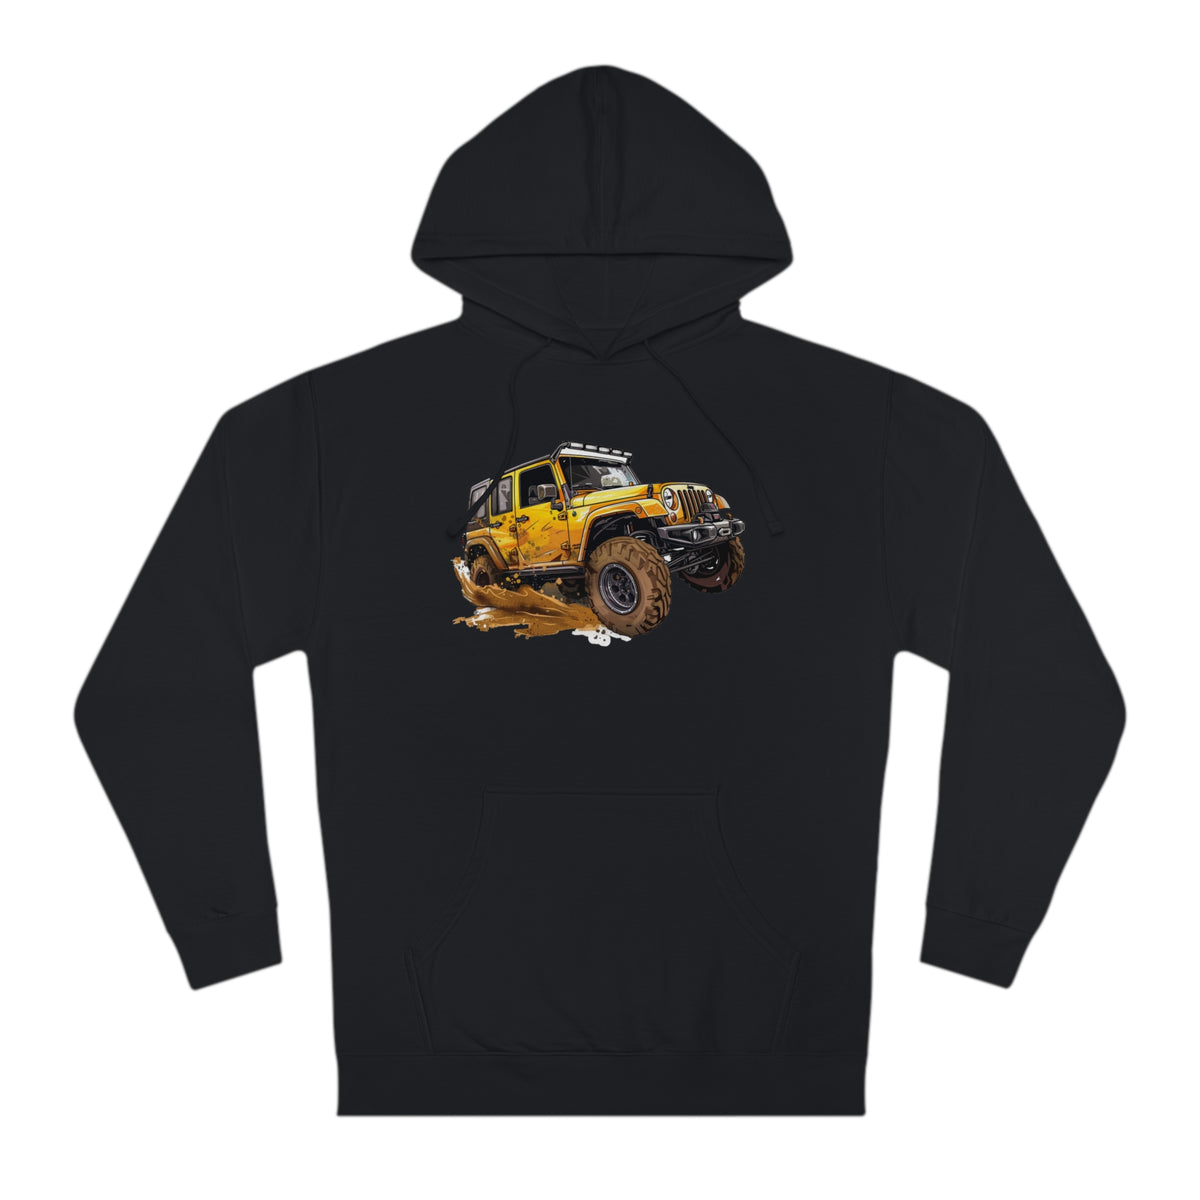 Mud-Splashed Maverick Hoodie with Dynamic Jeep Artwork Hooded Sweatshirt